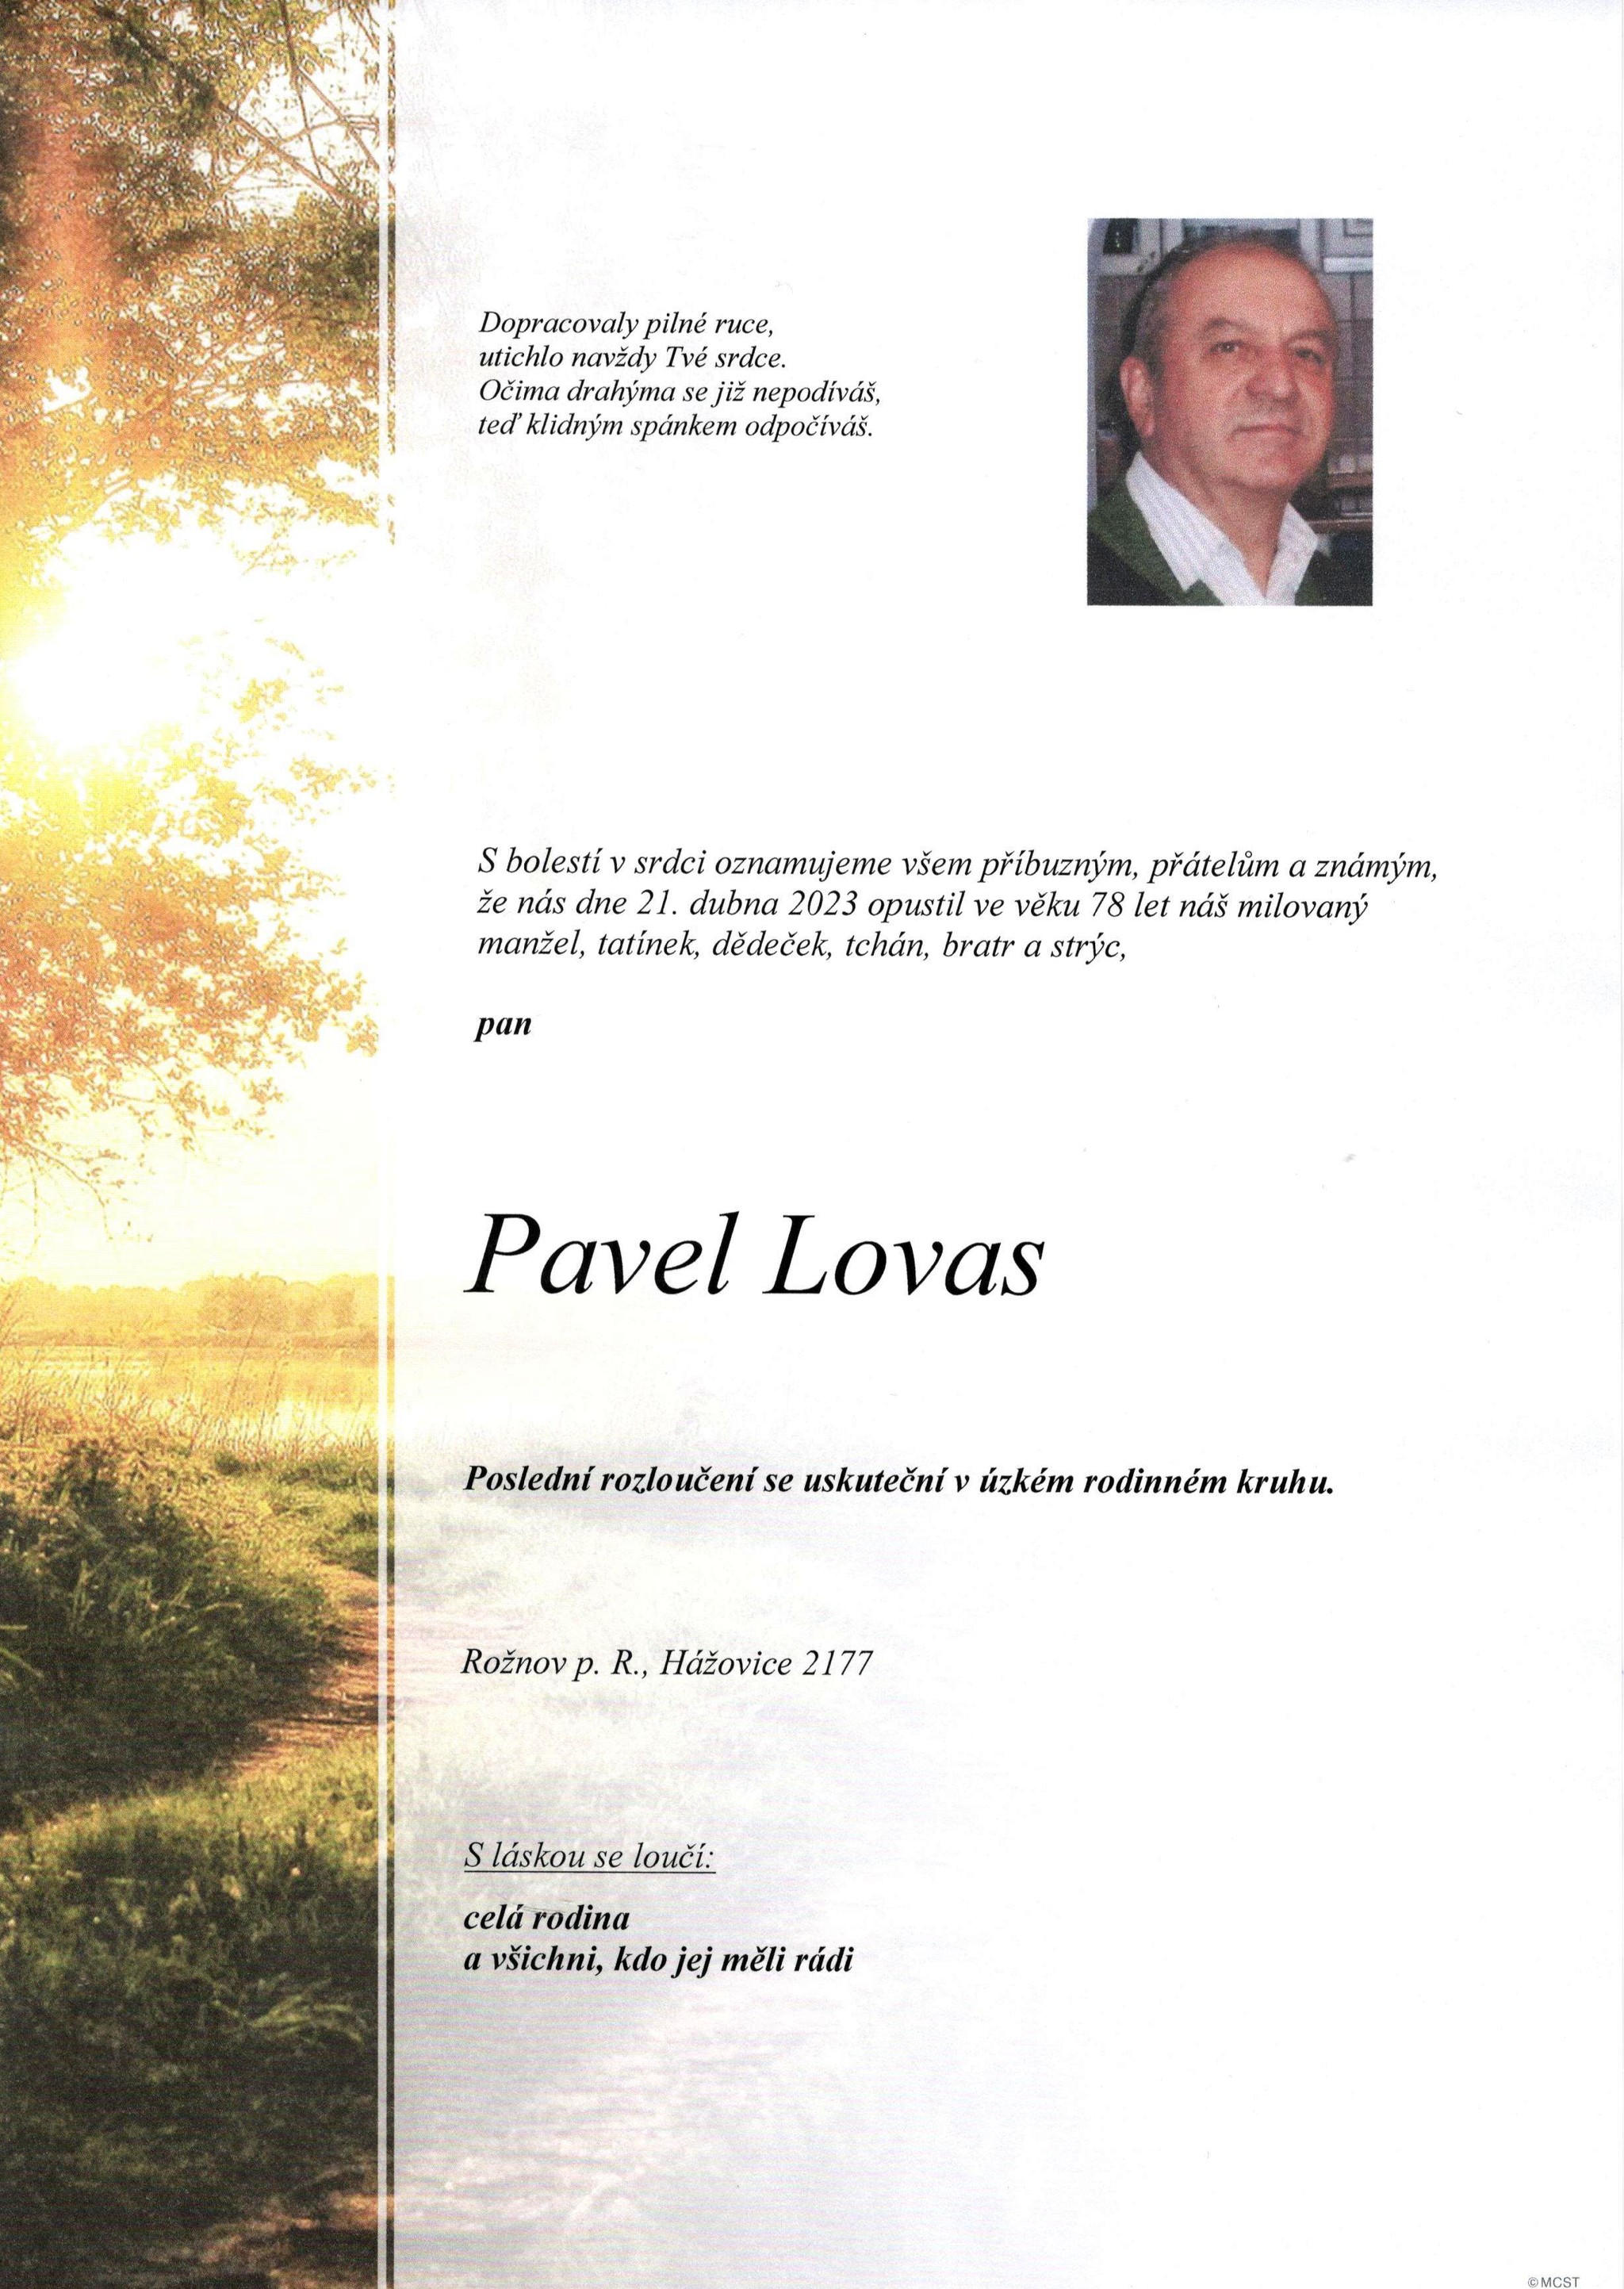 Pavel Lovas